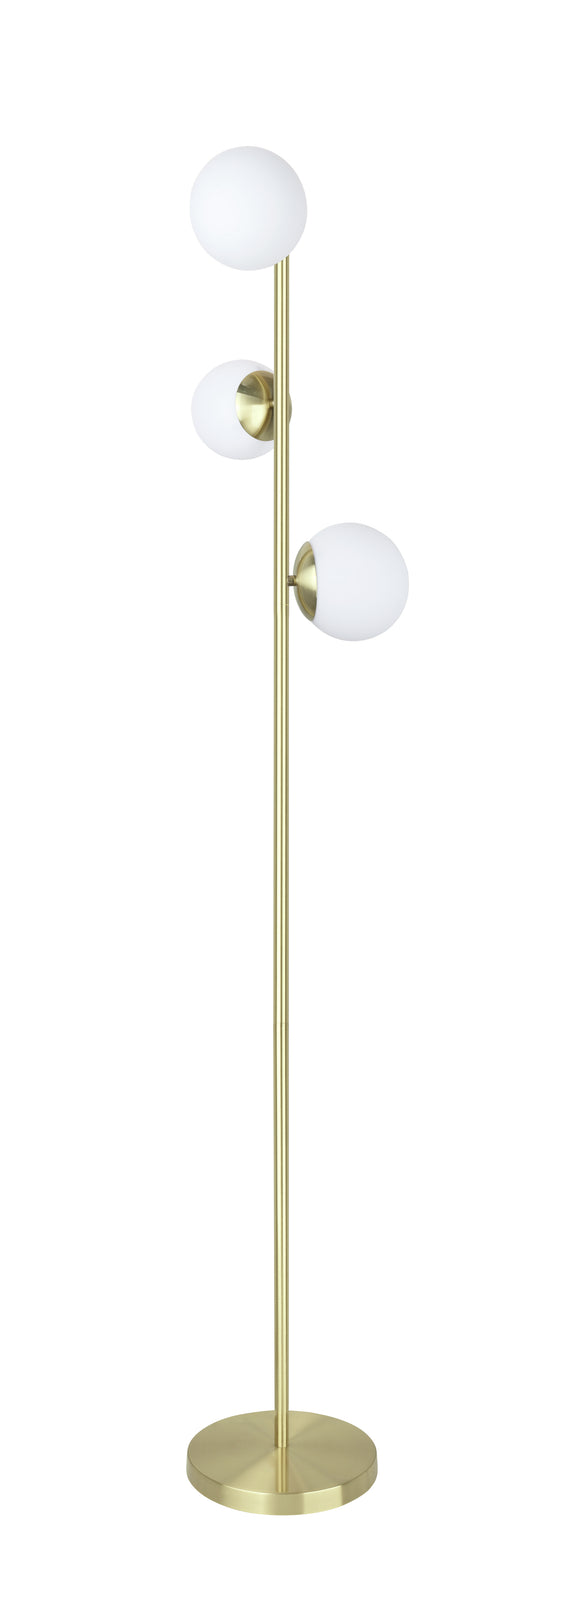 # 45021-11, Three-Light Floor Lamp, Transitional Design in Satin Brass, 65-1/2